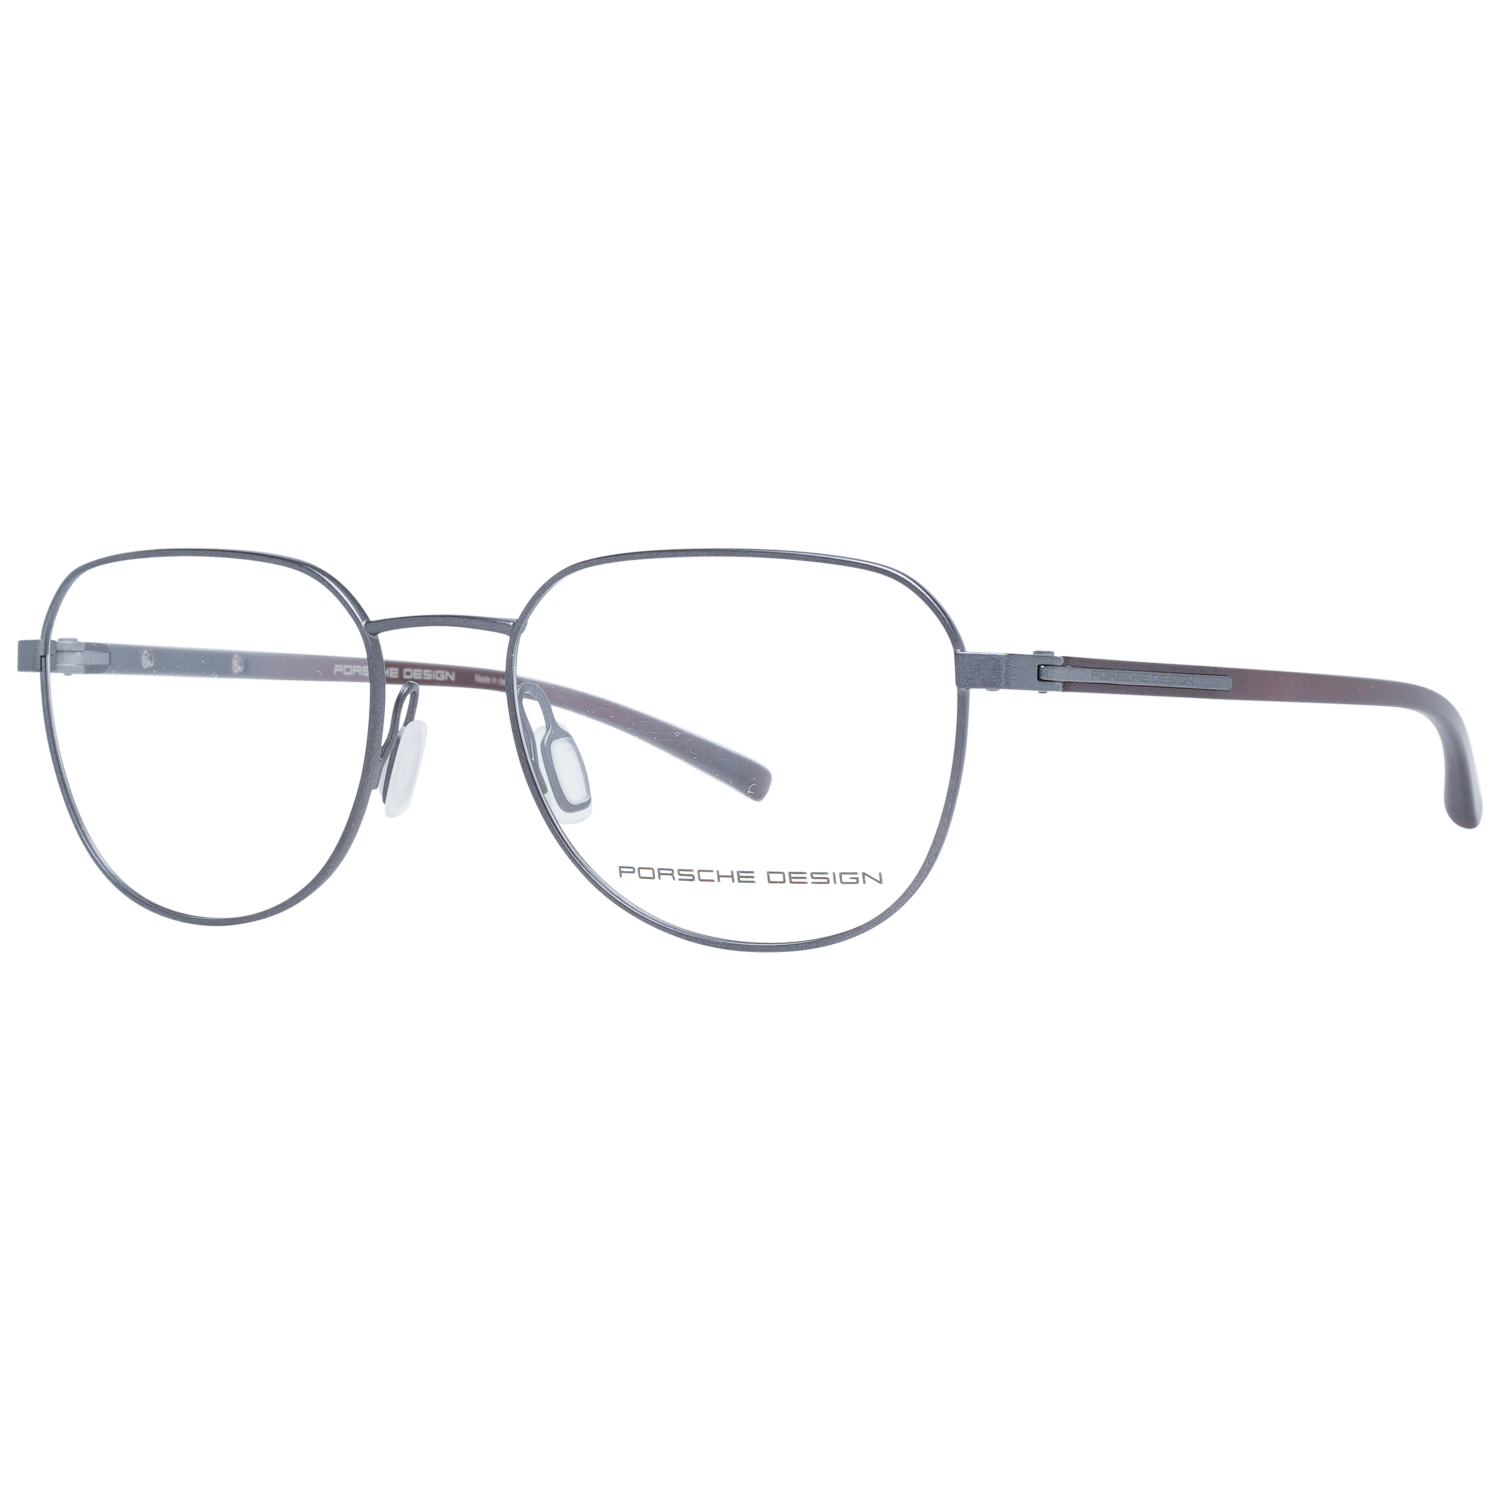 Porsche Design Eyeglasses Glasses Frame P8367 C 52 Eyewear UK USA Australia 